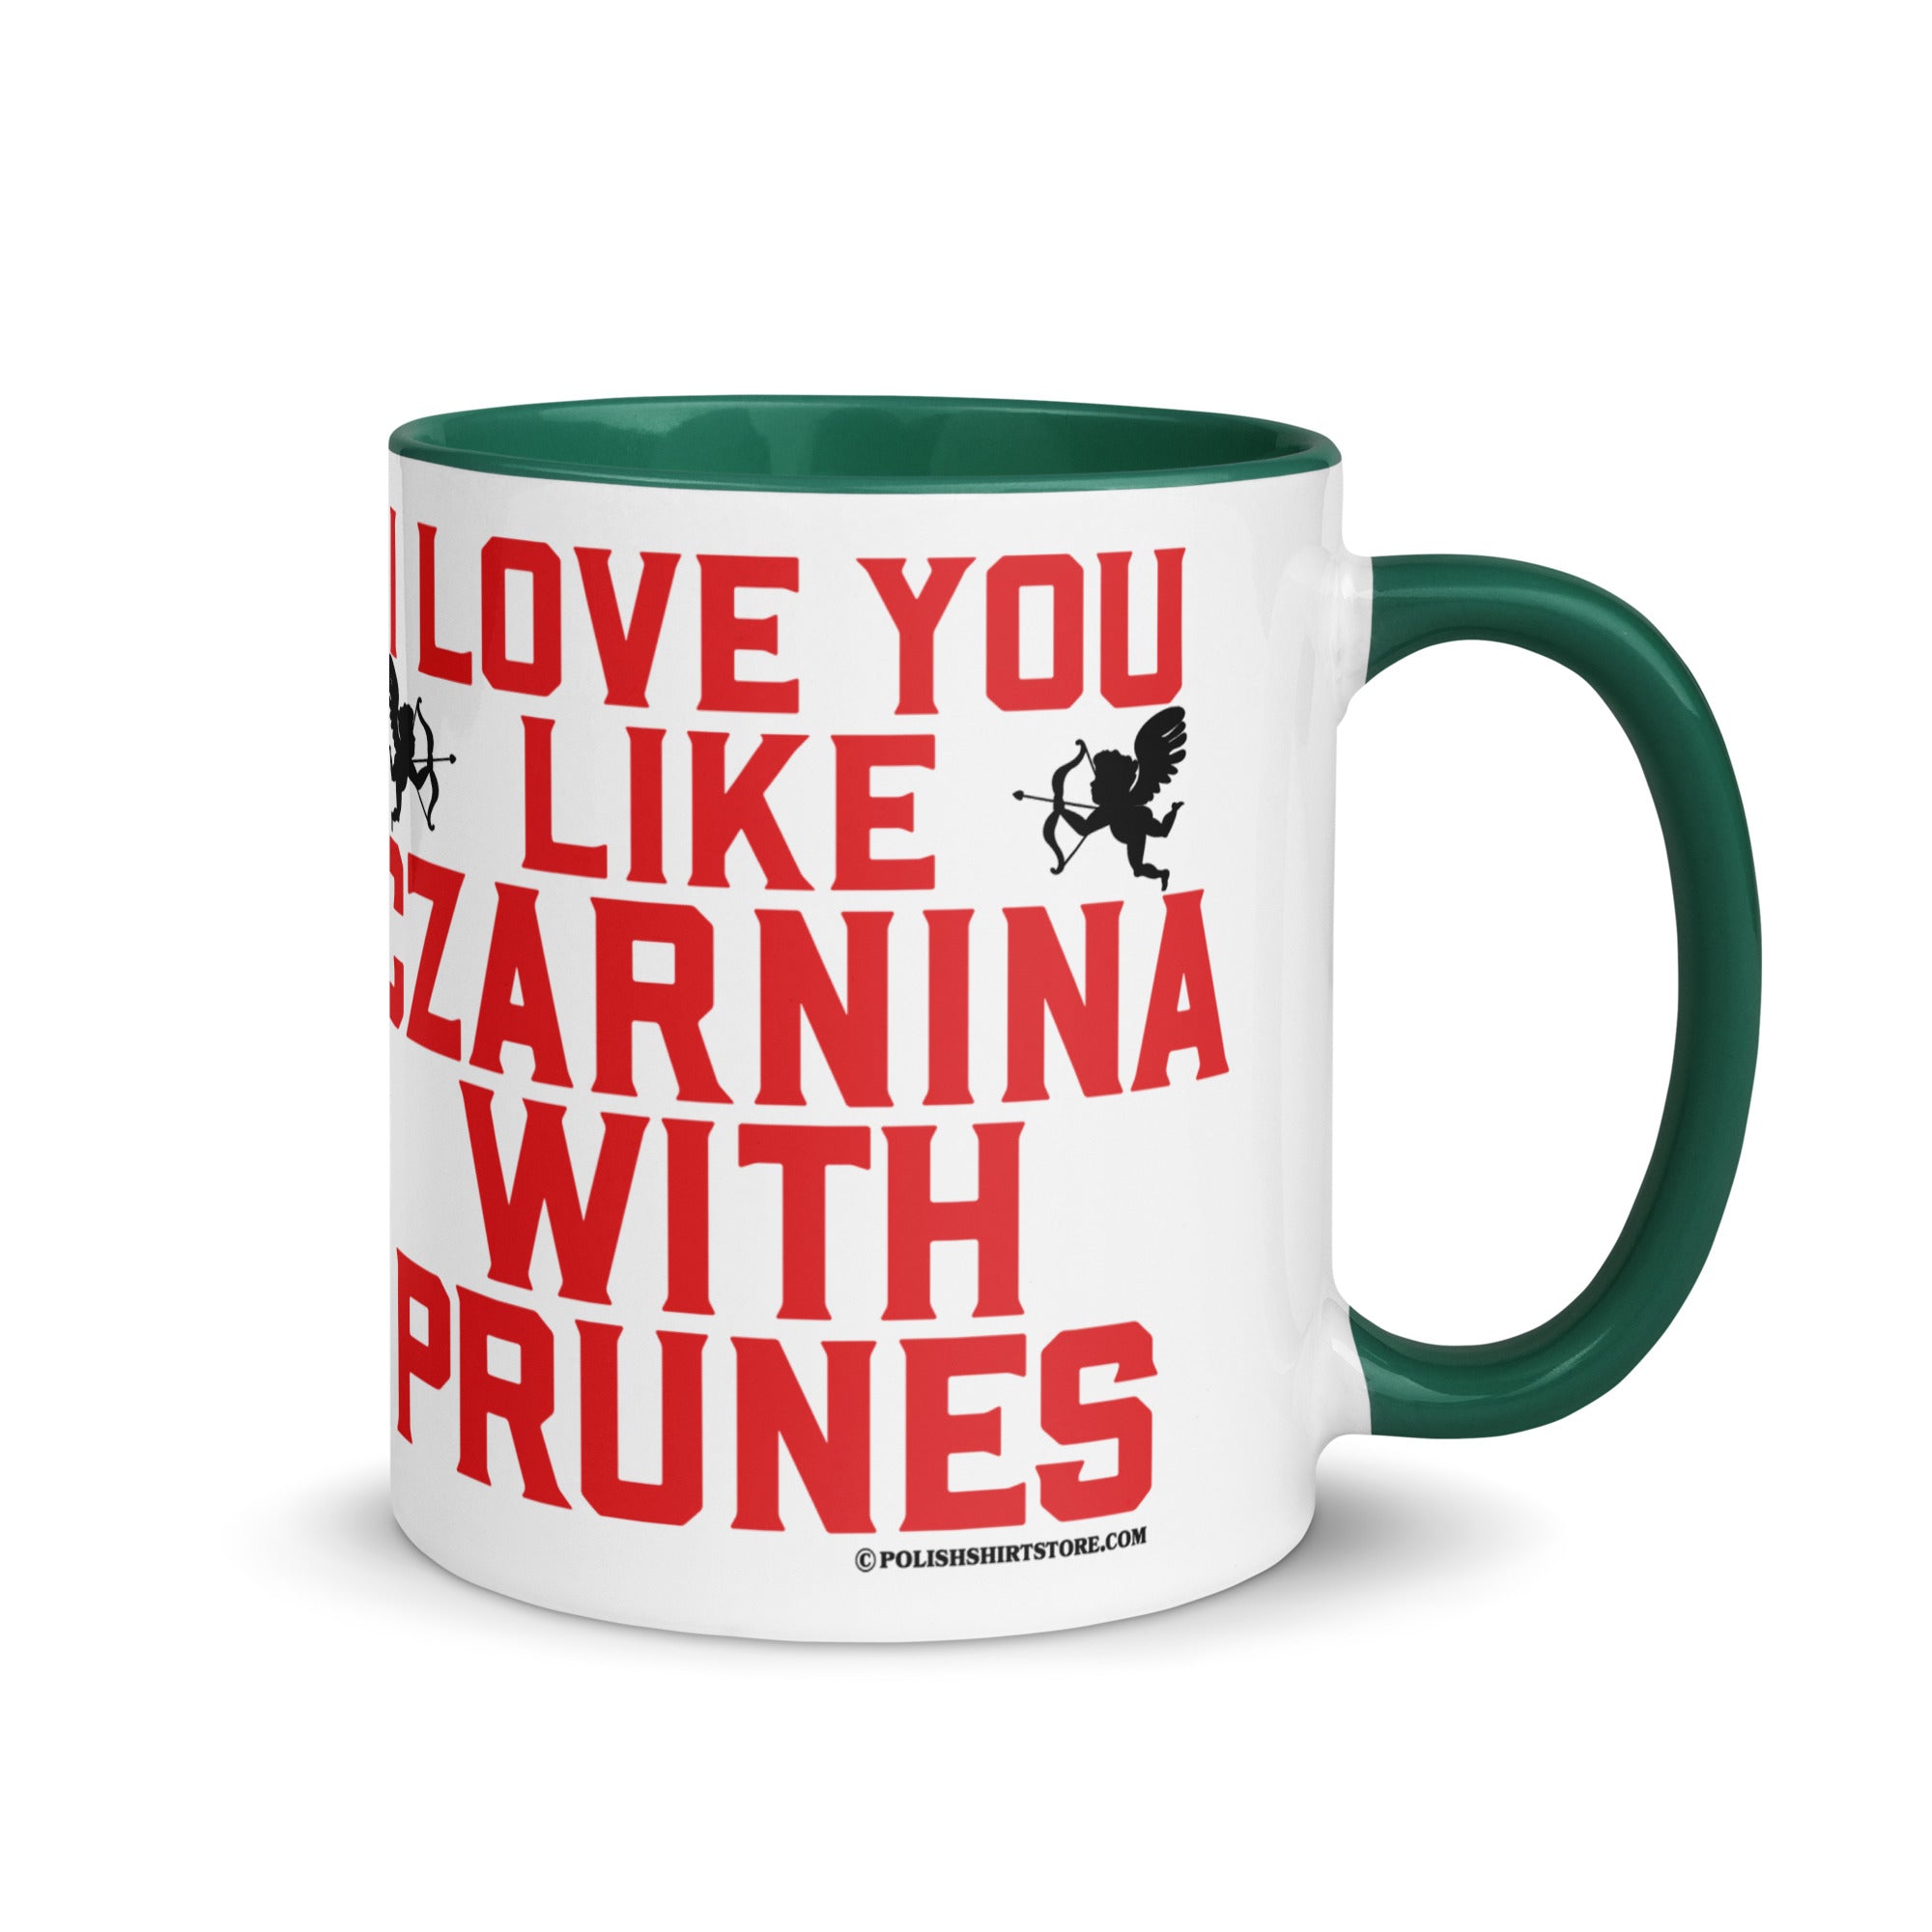 I Love You Like Czarnina With Prunes Coffee Mug with Color Inside  Polish Shirt Store Dark green 11 oz 